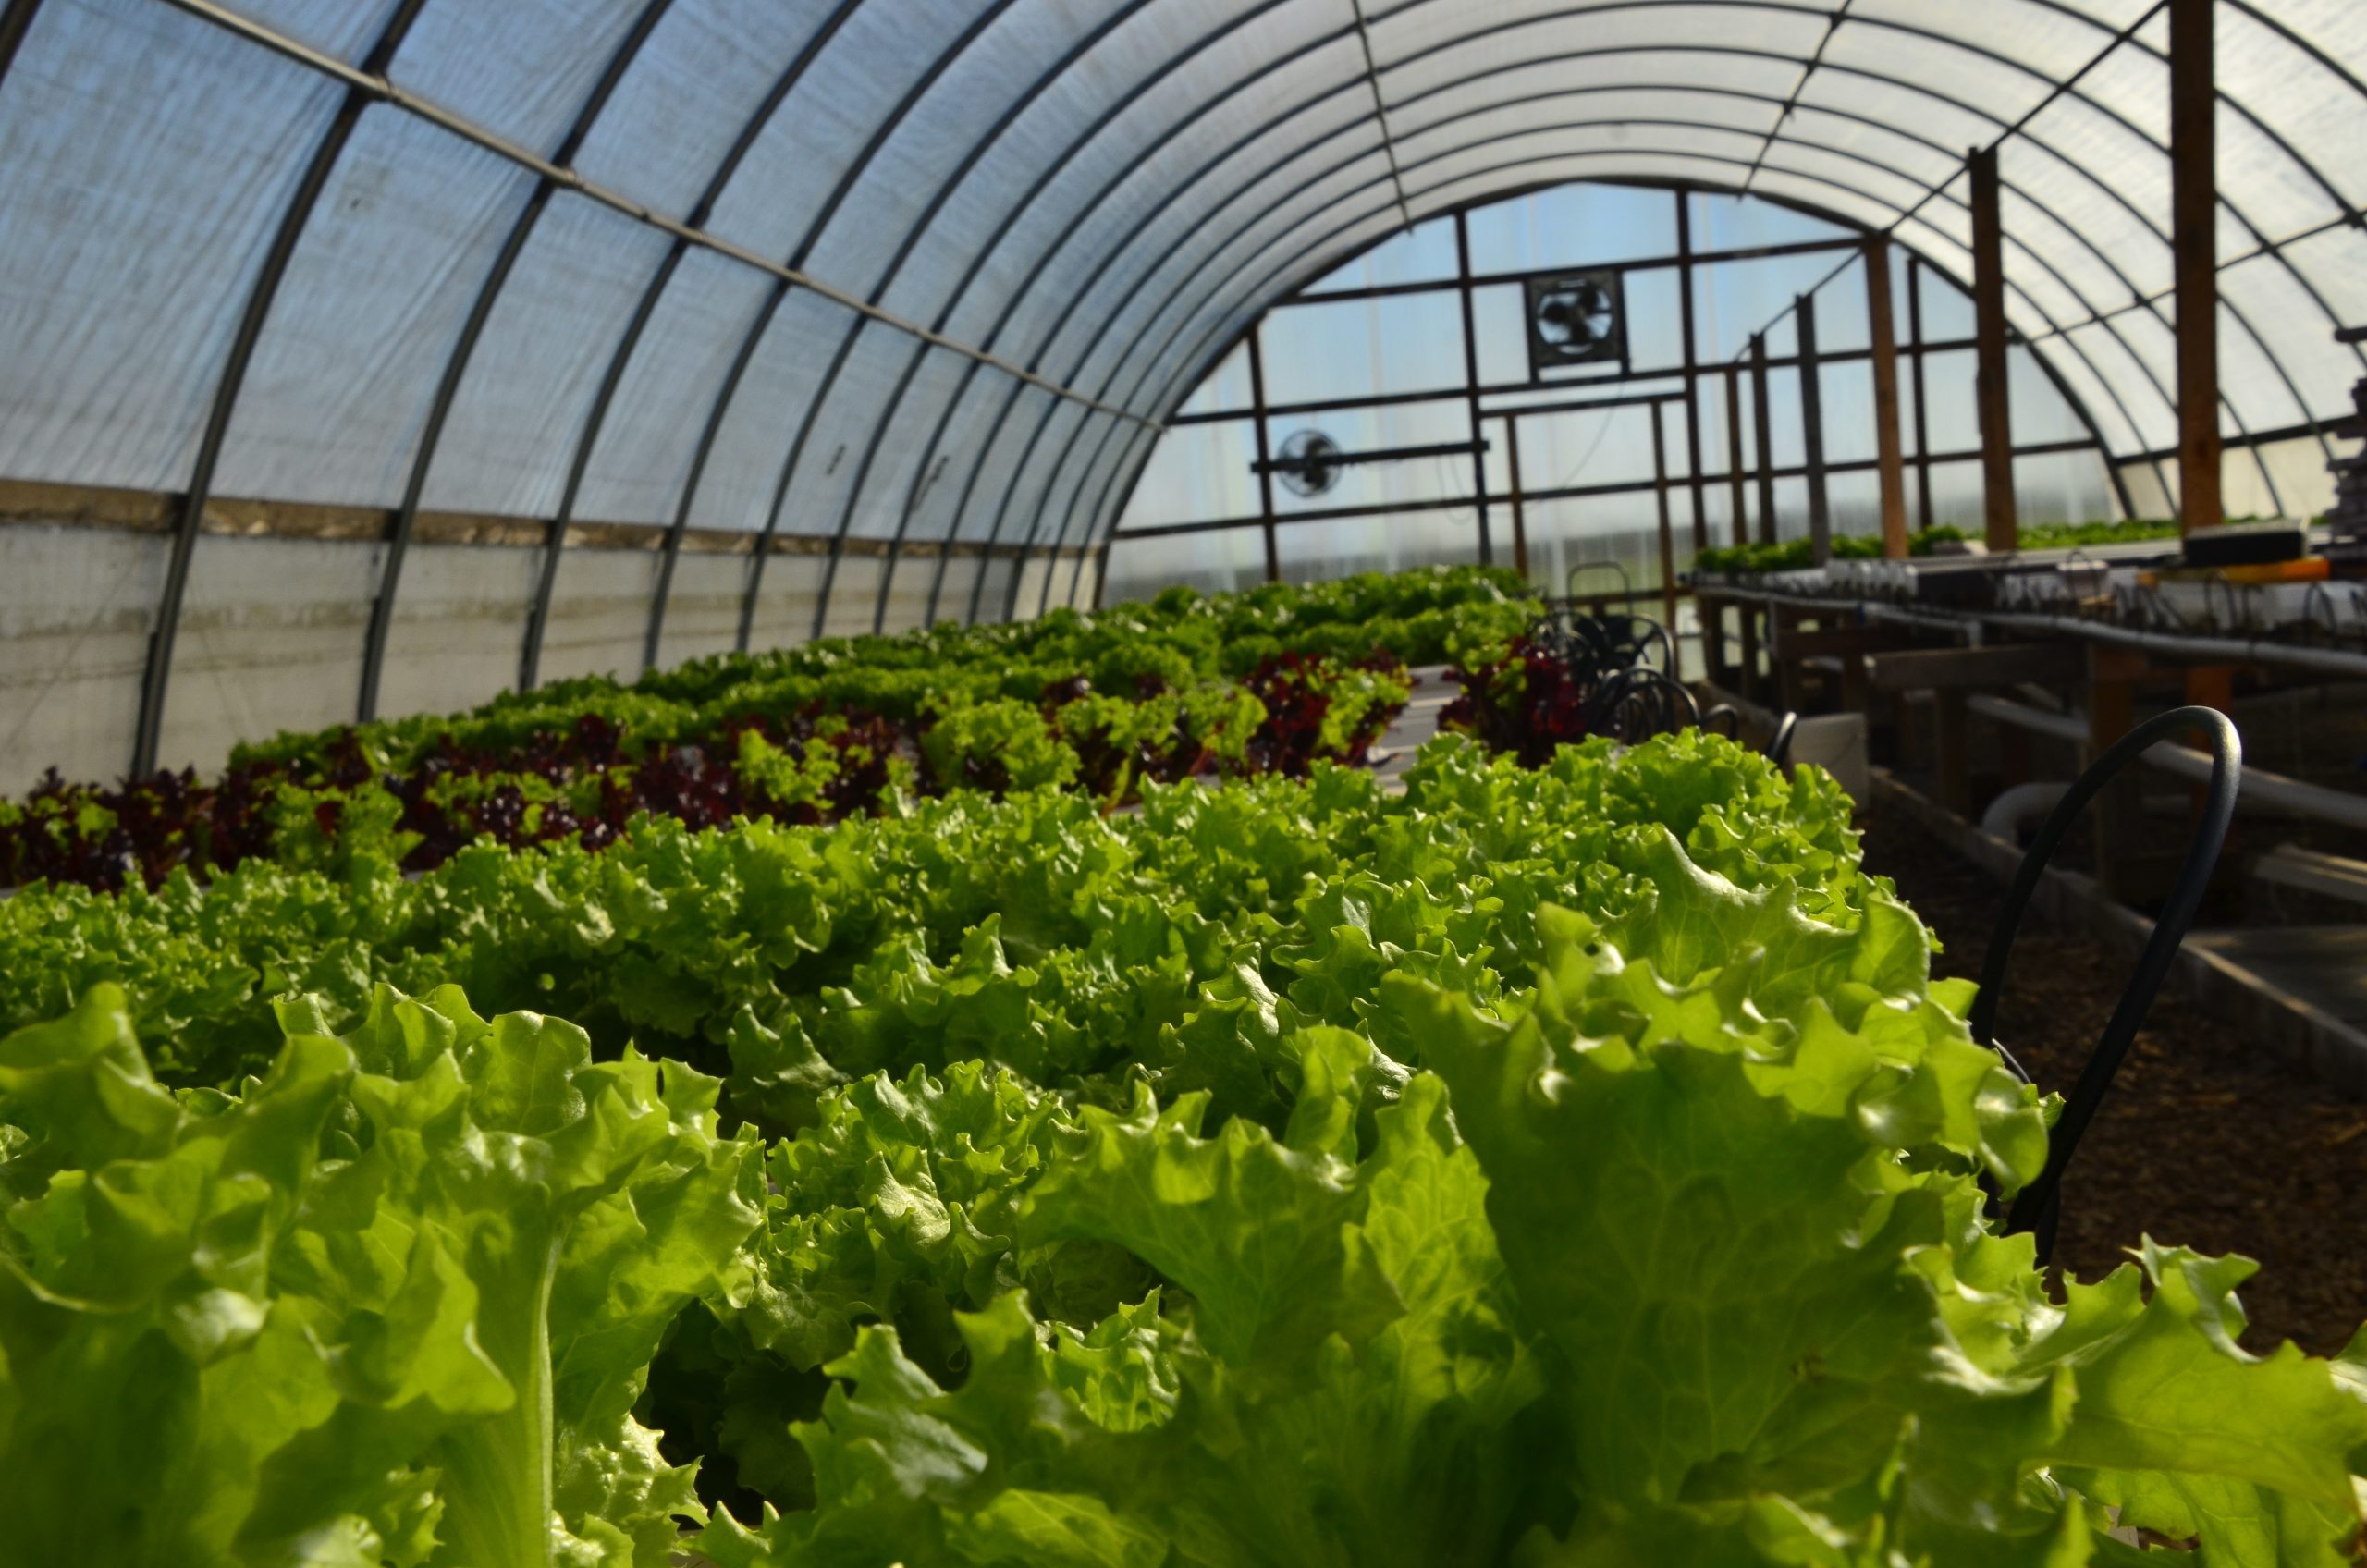 brakstad_farms_lettuce_news